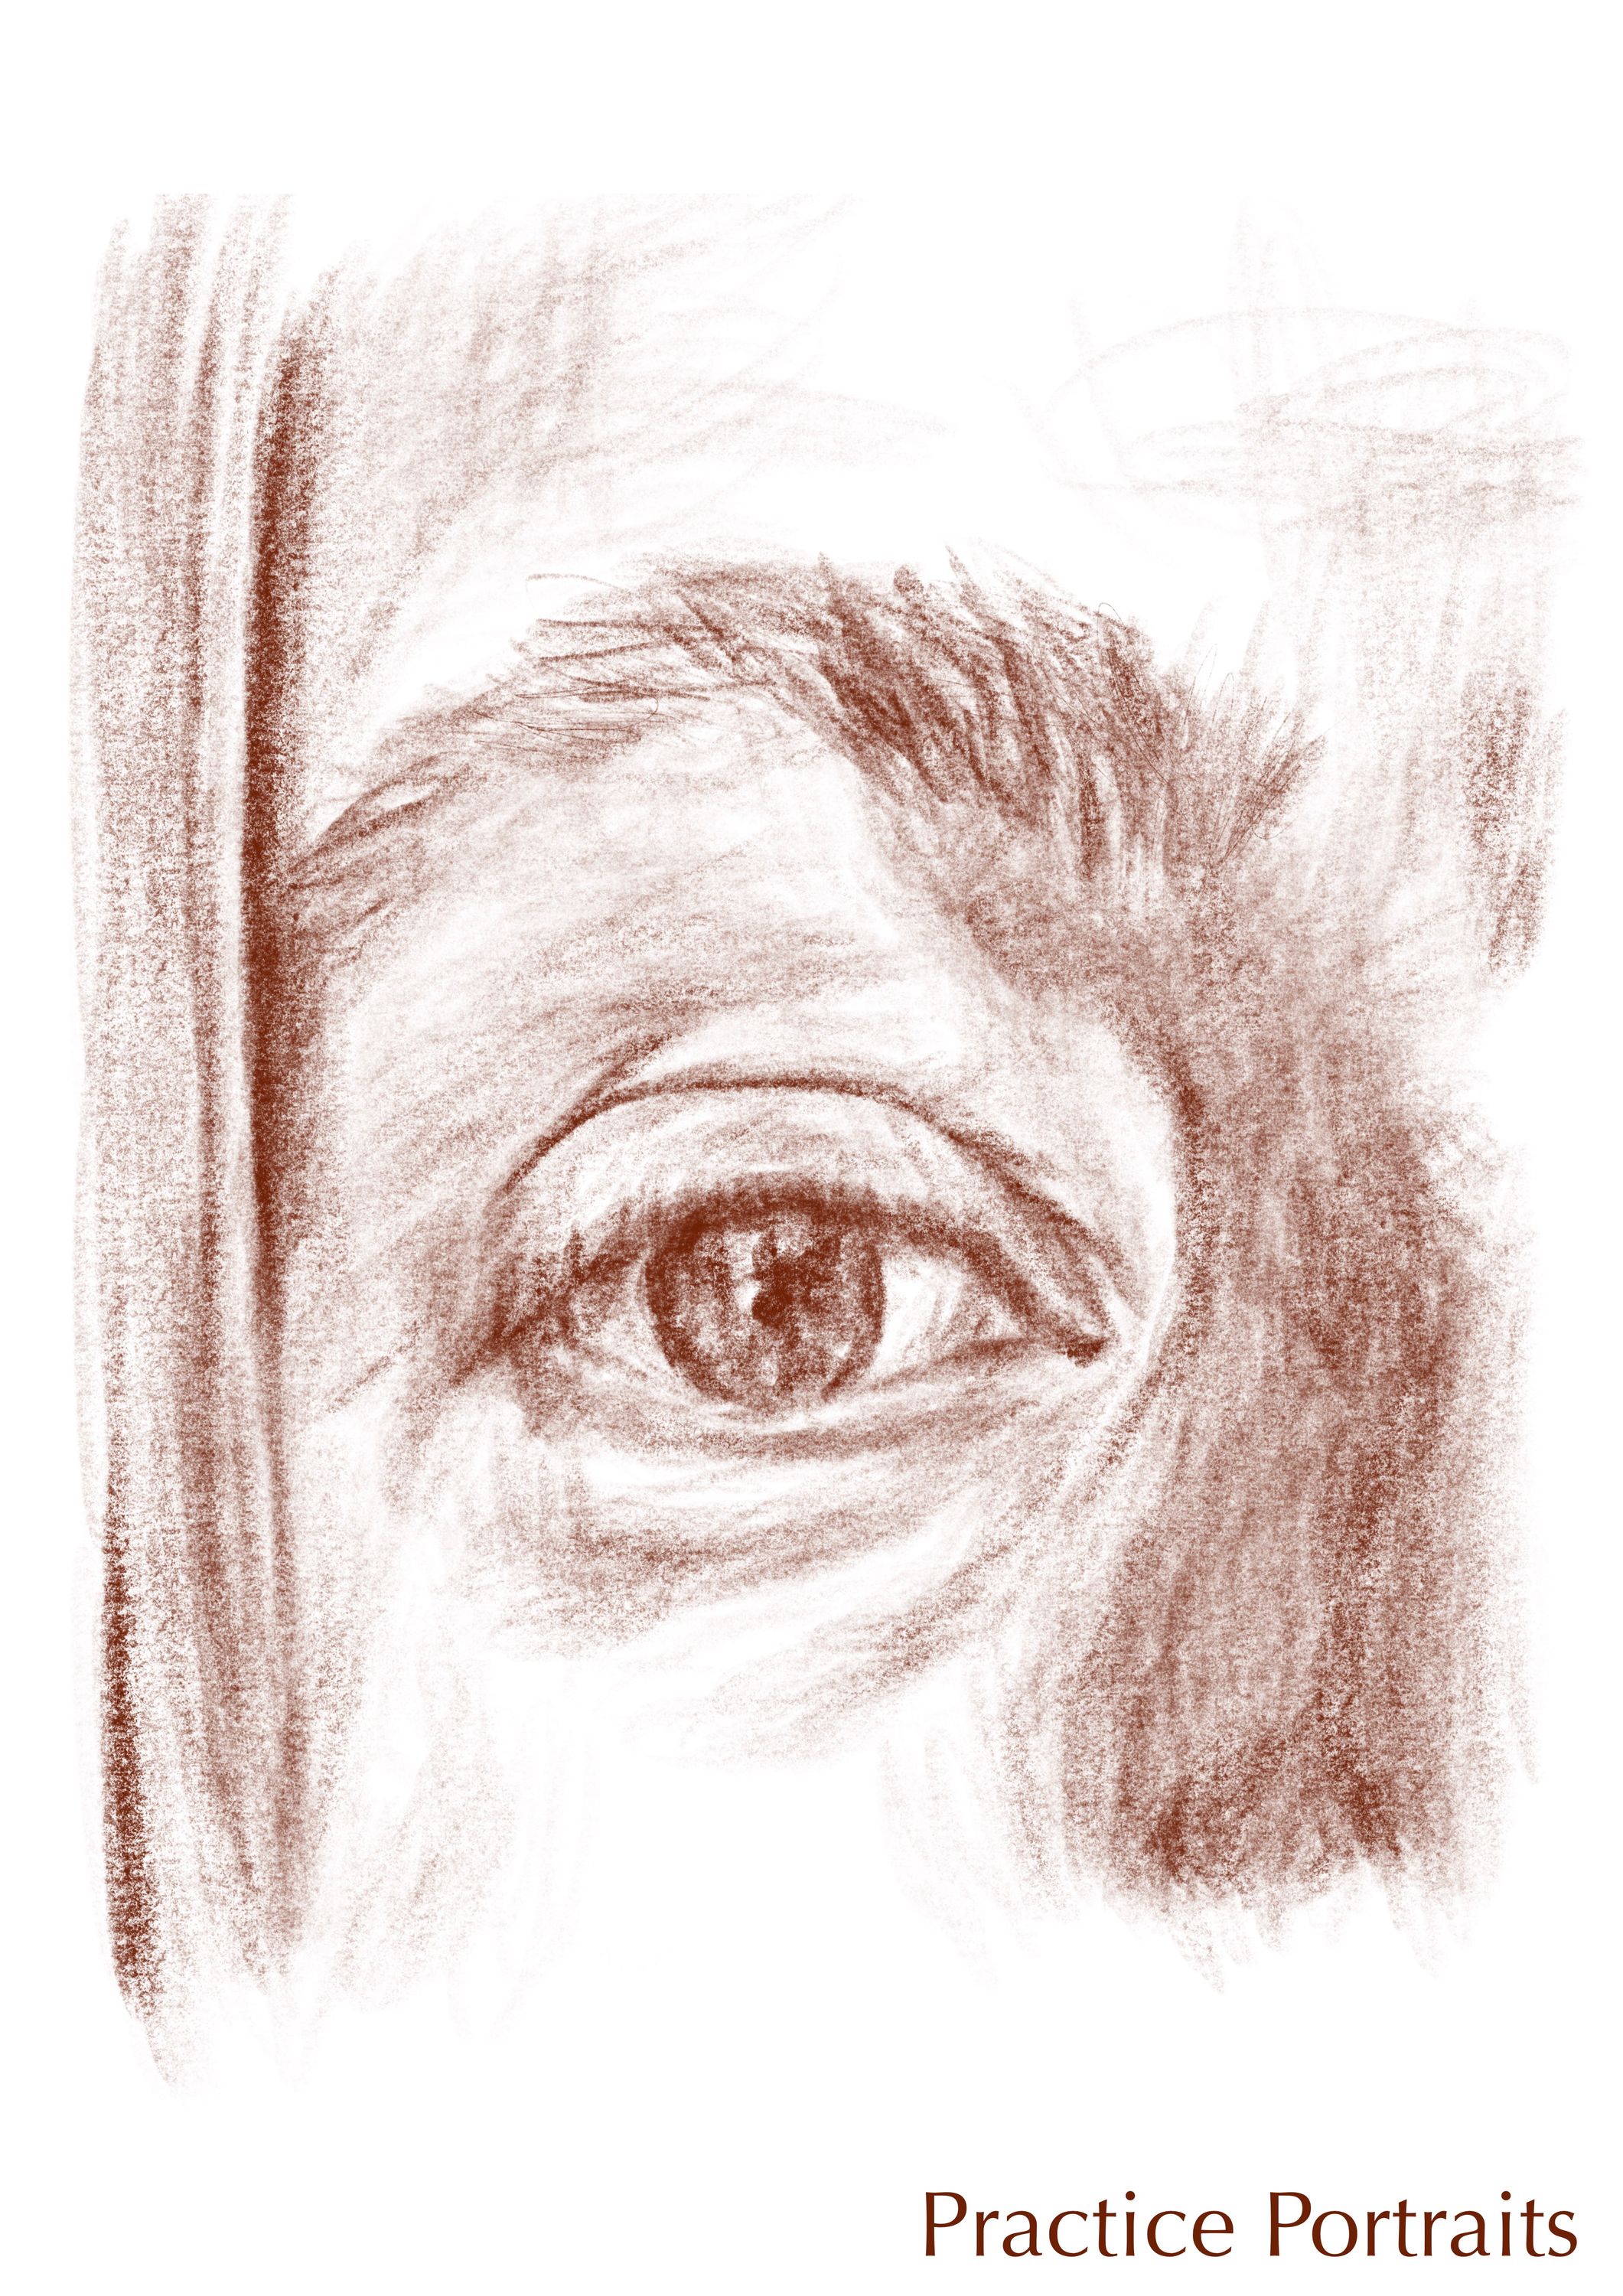 bianca’s eye 2020 - digital pencil drawing